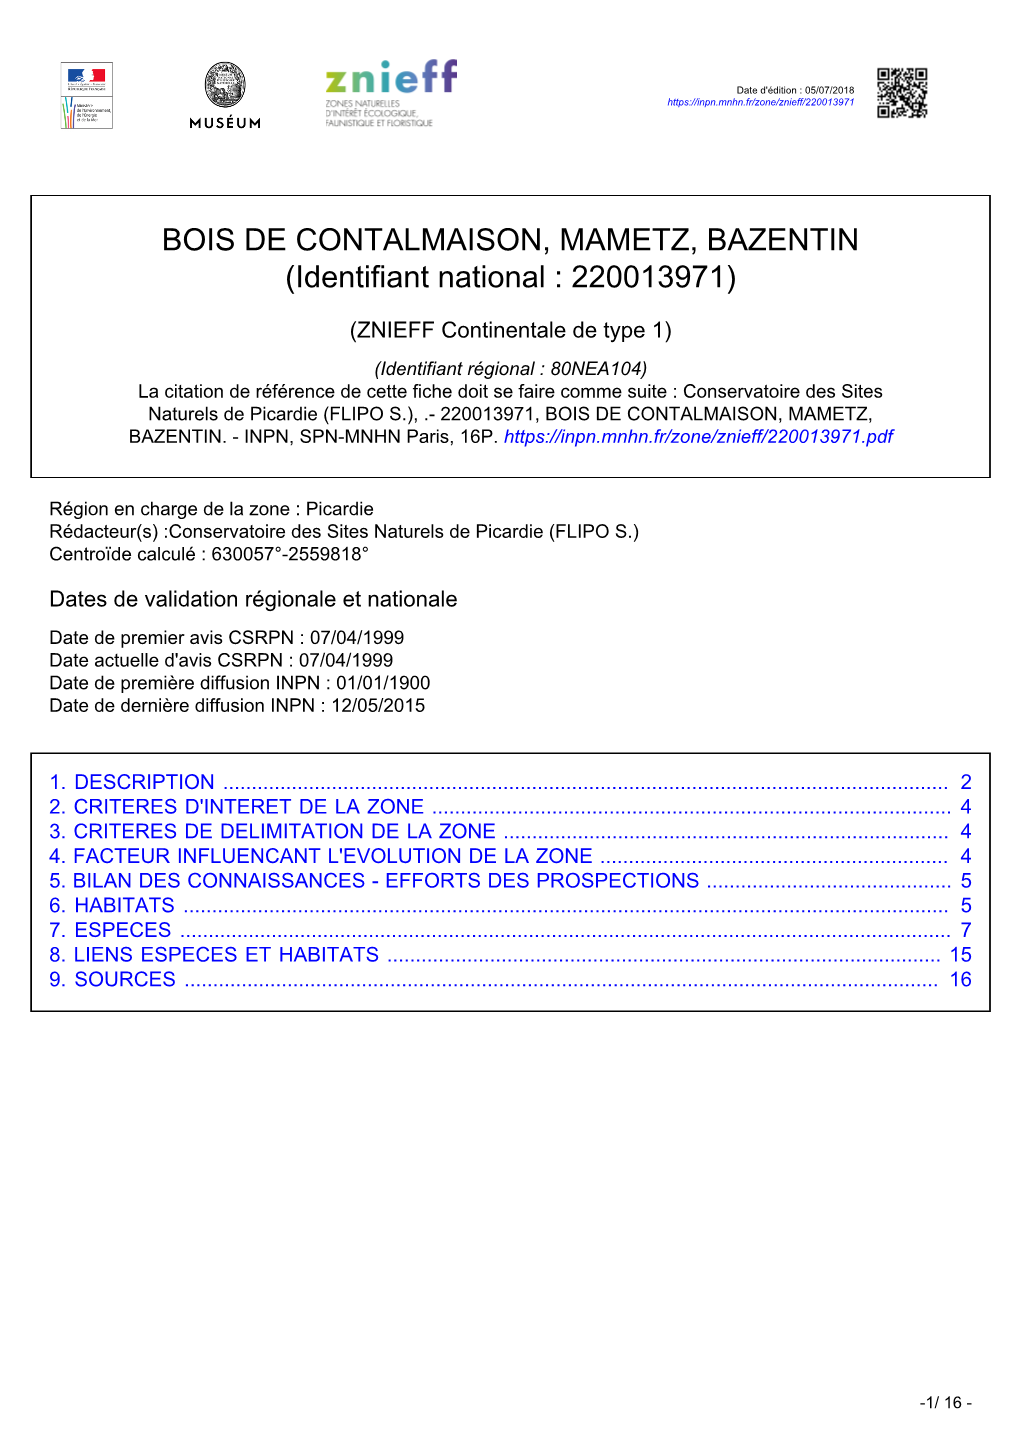 BOIS DE CONTALMAISON, MAMETZ, BAZENTIN (Identifiant National : 220013971)